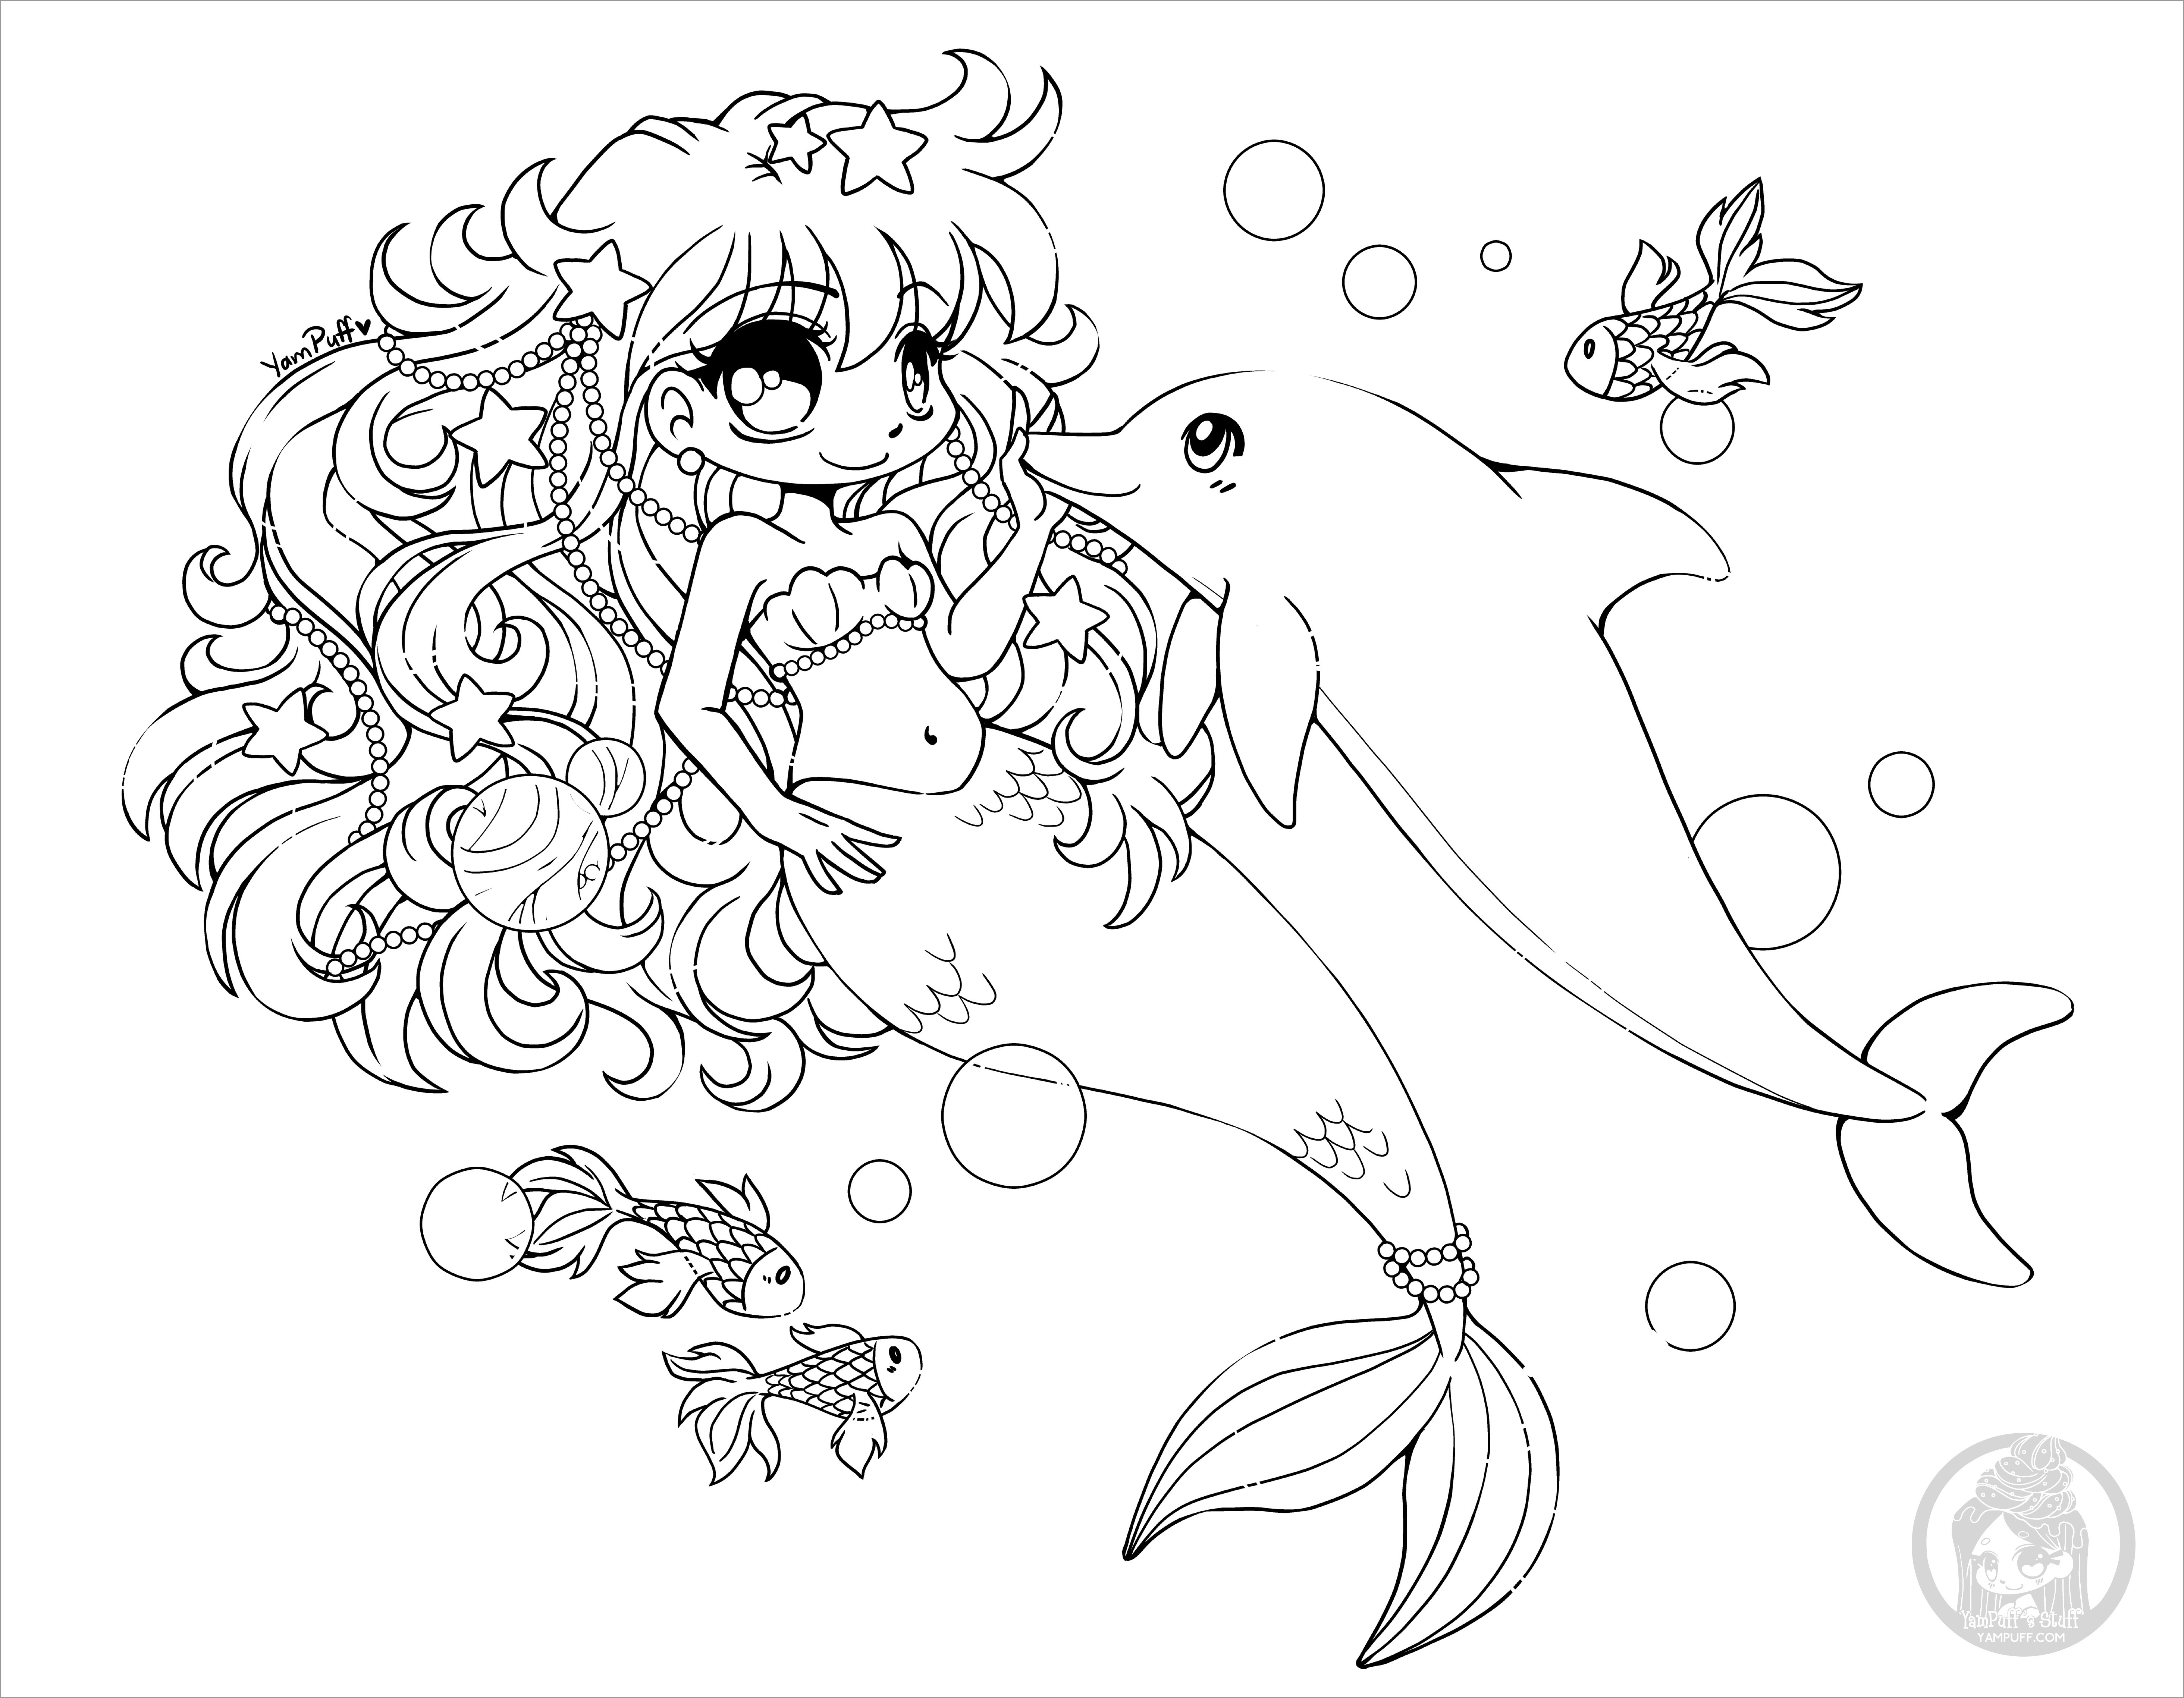 Chibi Mermaid Coloring Pages   ColoringBay